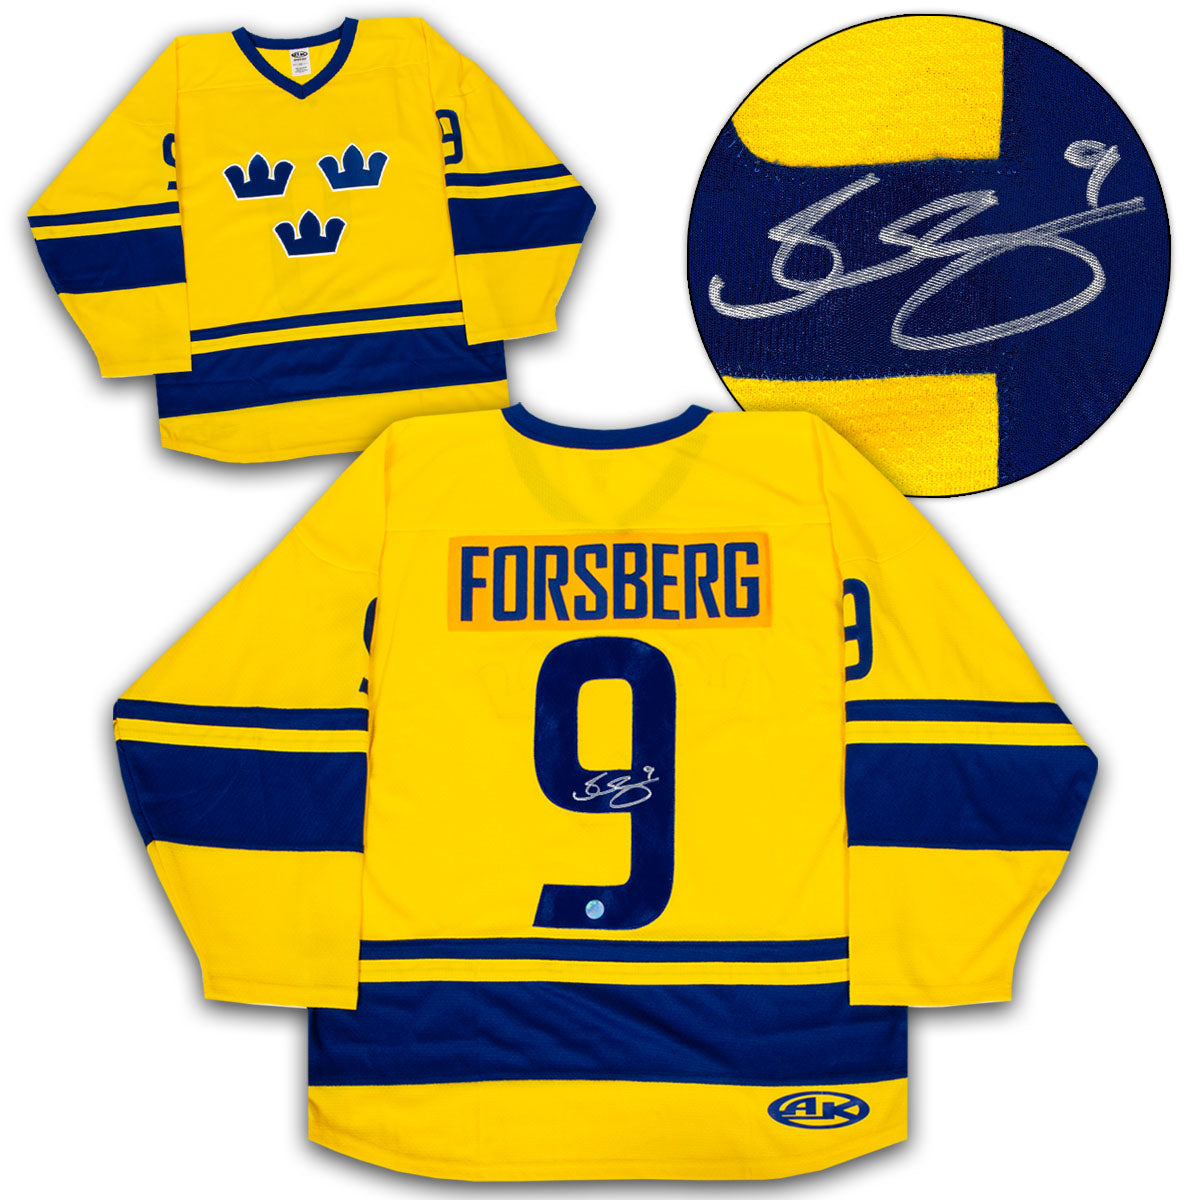 Filip Forsberg Team Sweden Autographed Hockey Jersey